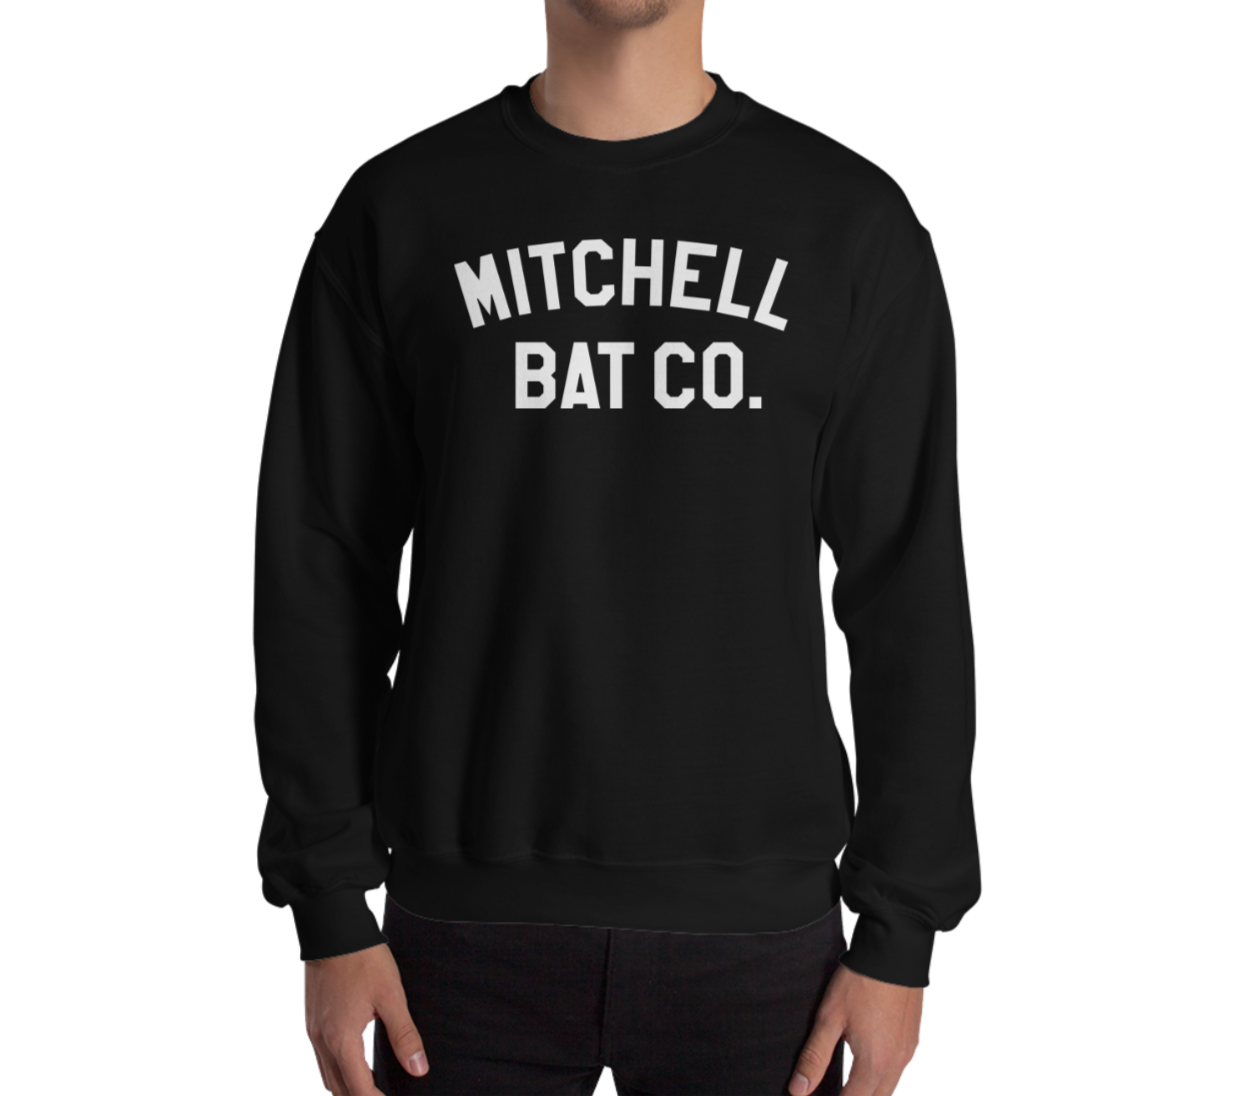 Mitchell Bat Co block logo sweatshirt (black)